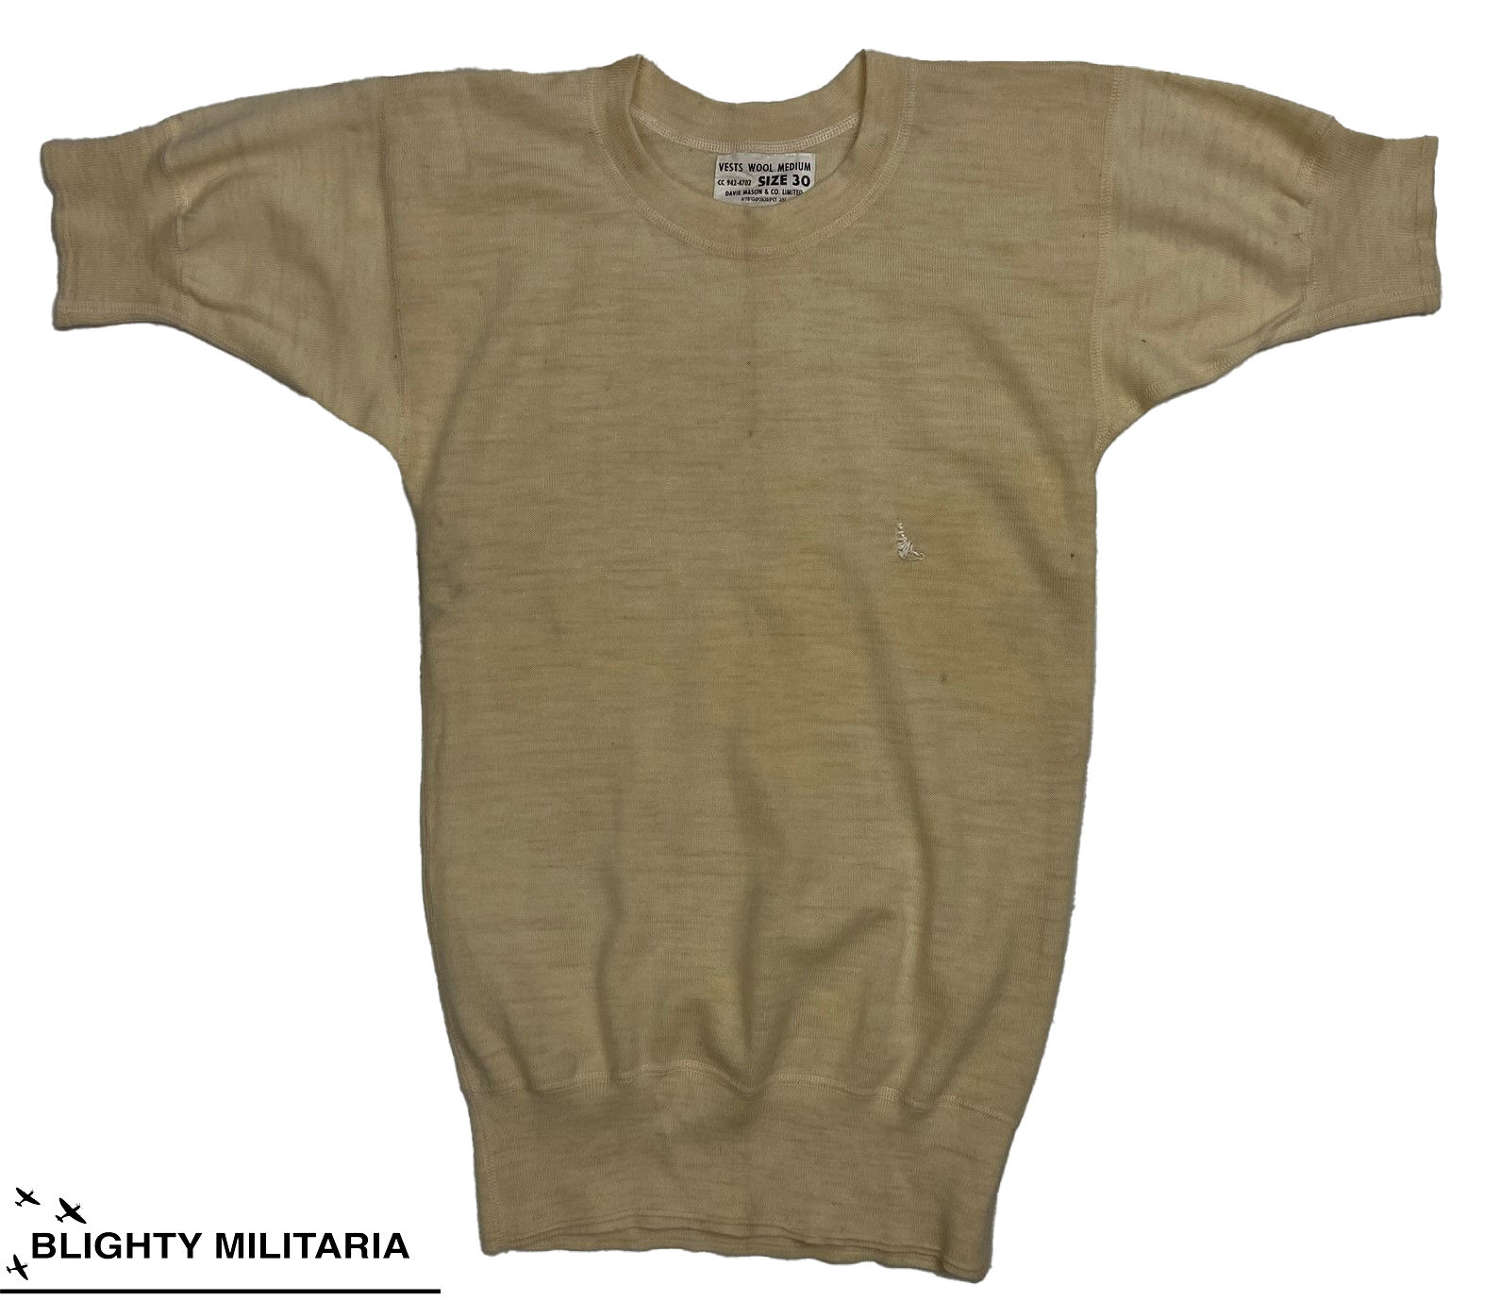 Original 1970 Dated British Army Wool Undershirt - Size 30